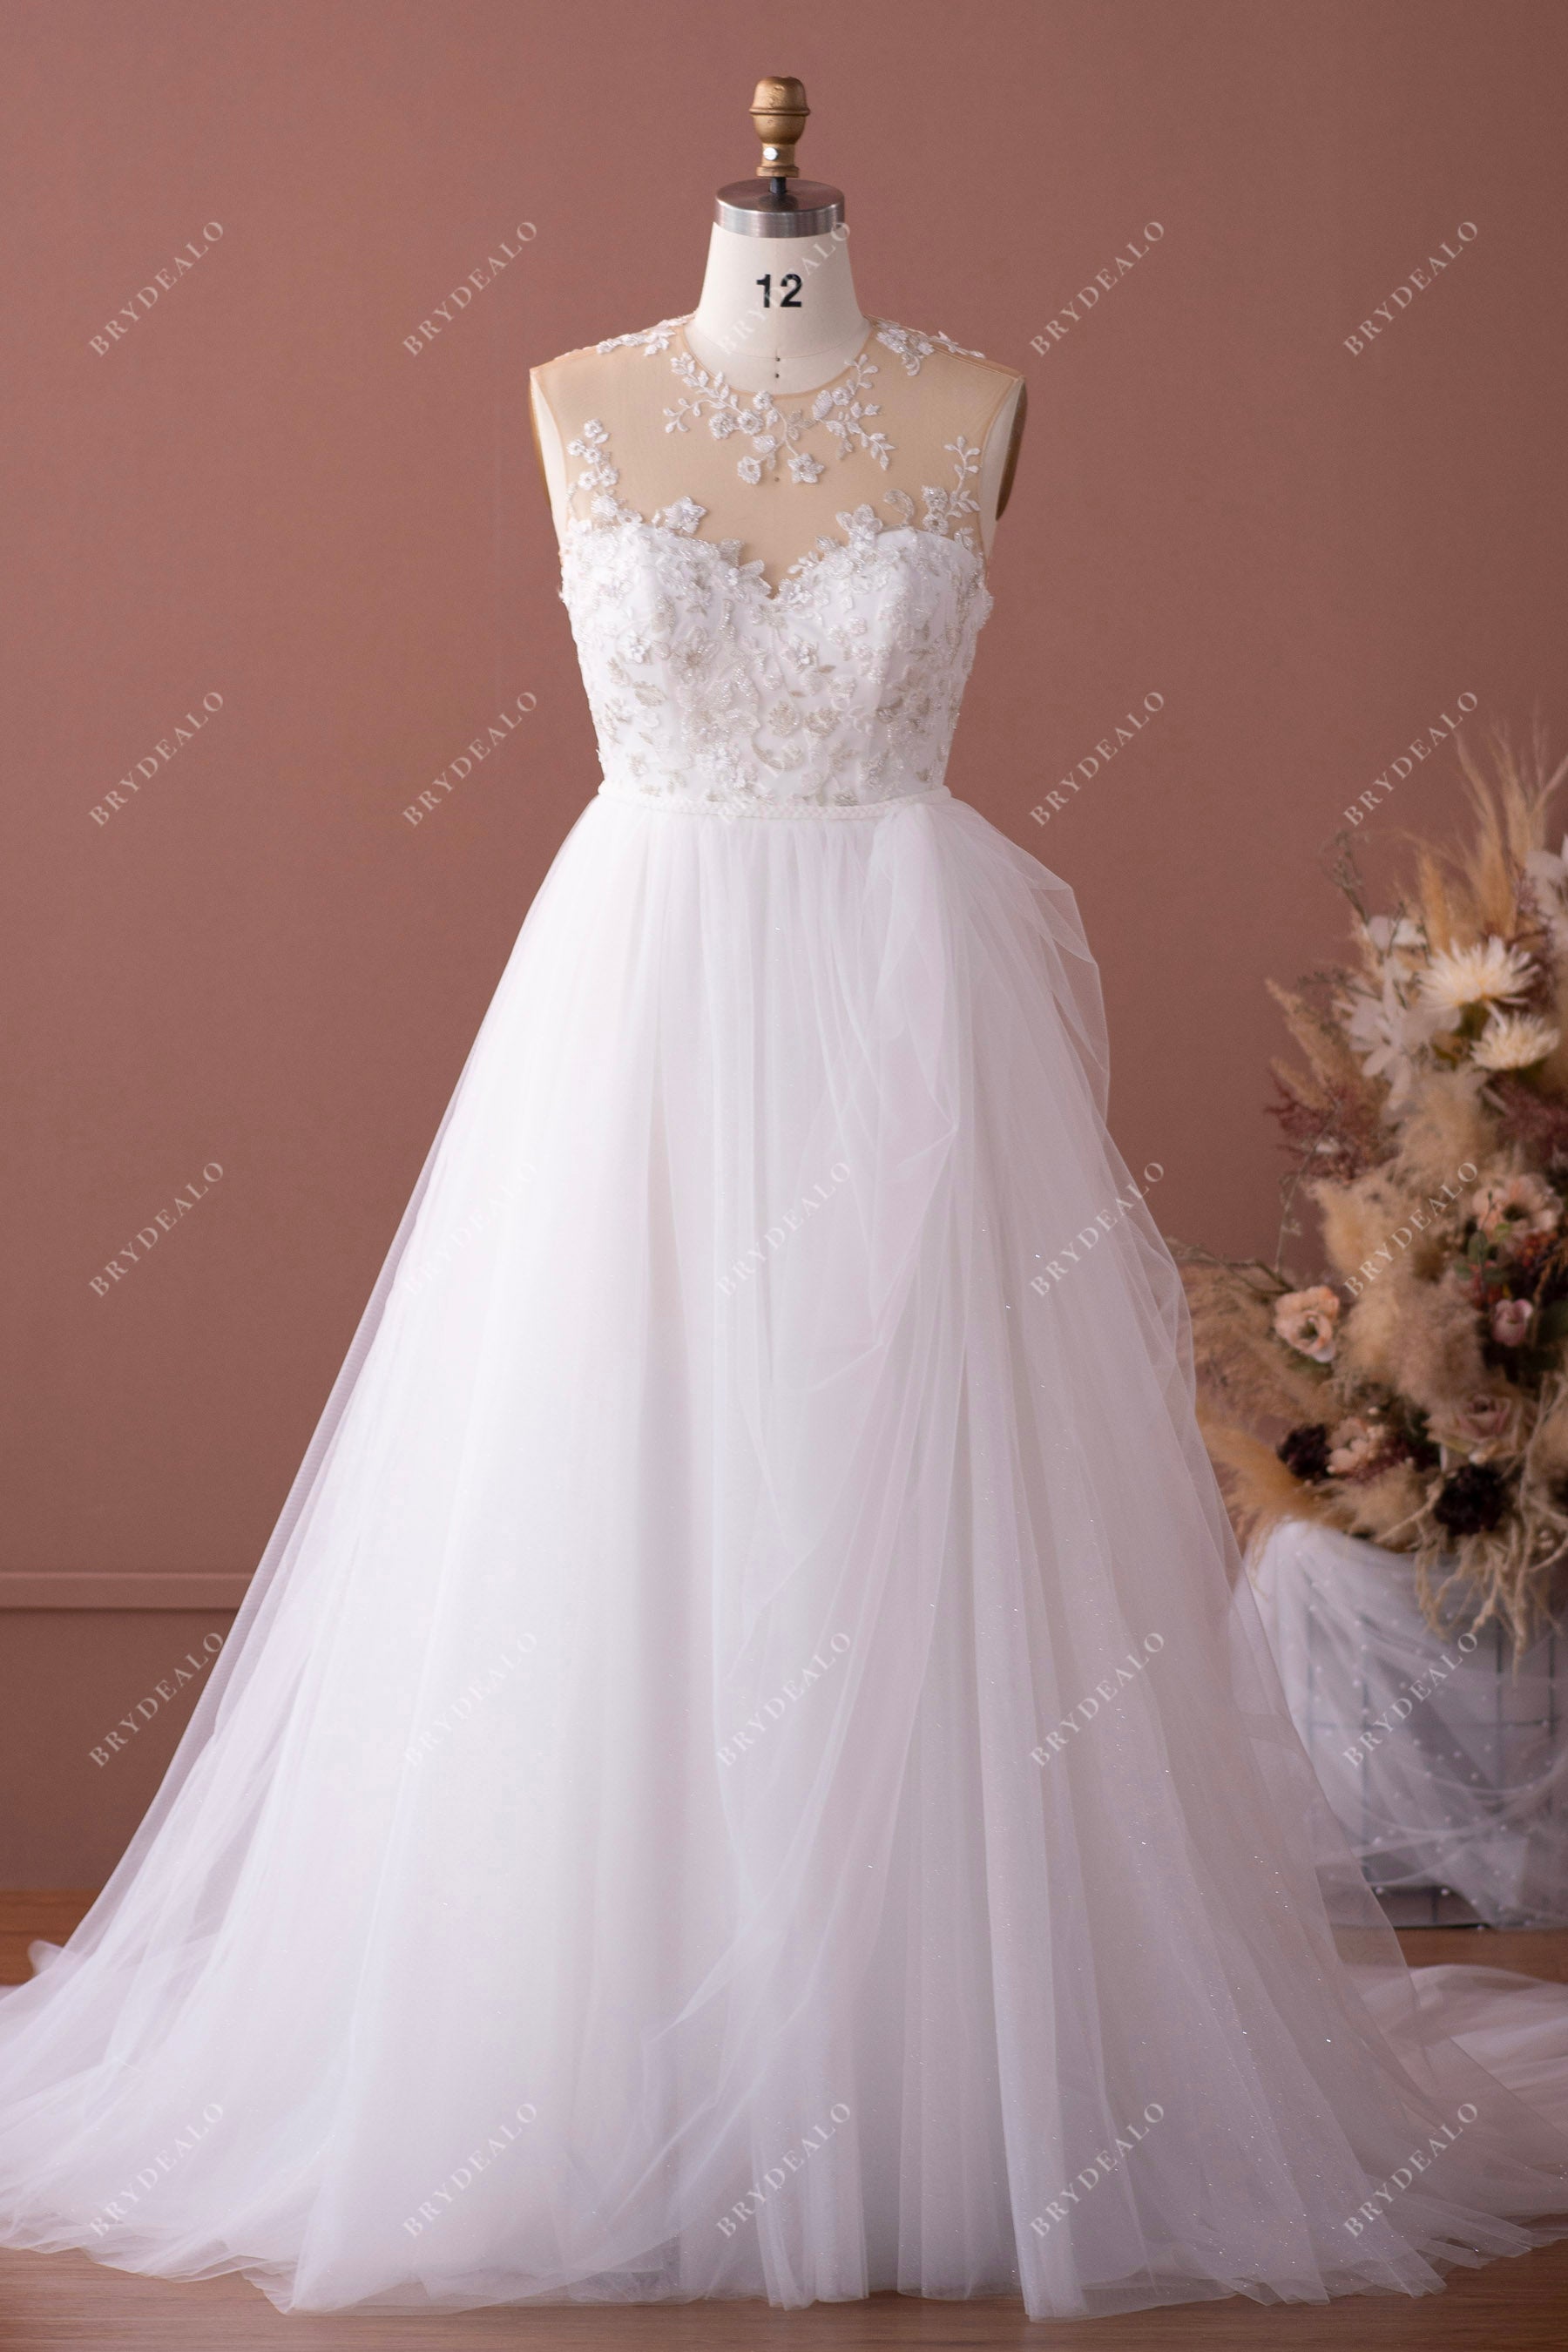 Illusion Neck Beaded Flower Lace Shimmery Wedding Dress